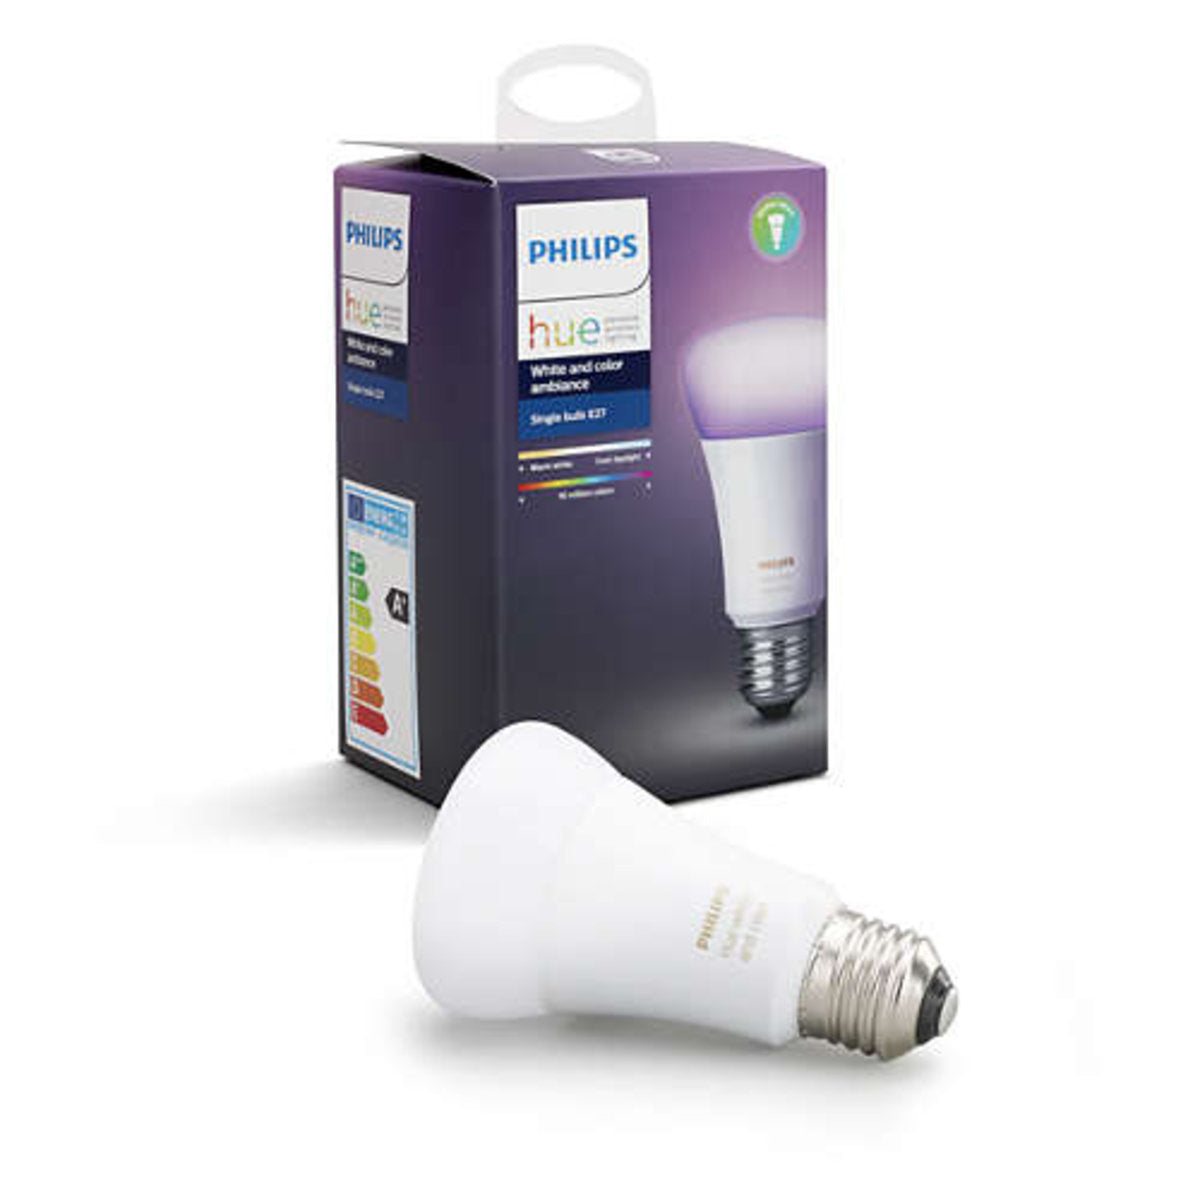 Philips-Hue E27 colored light single light bulb